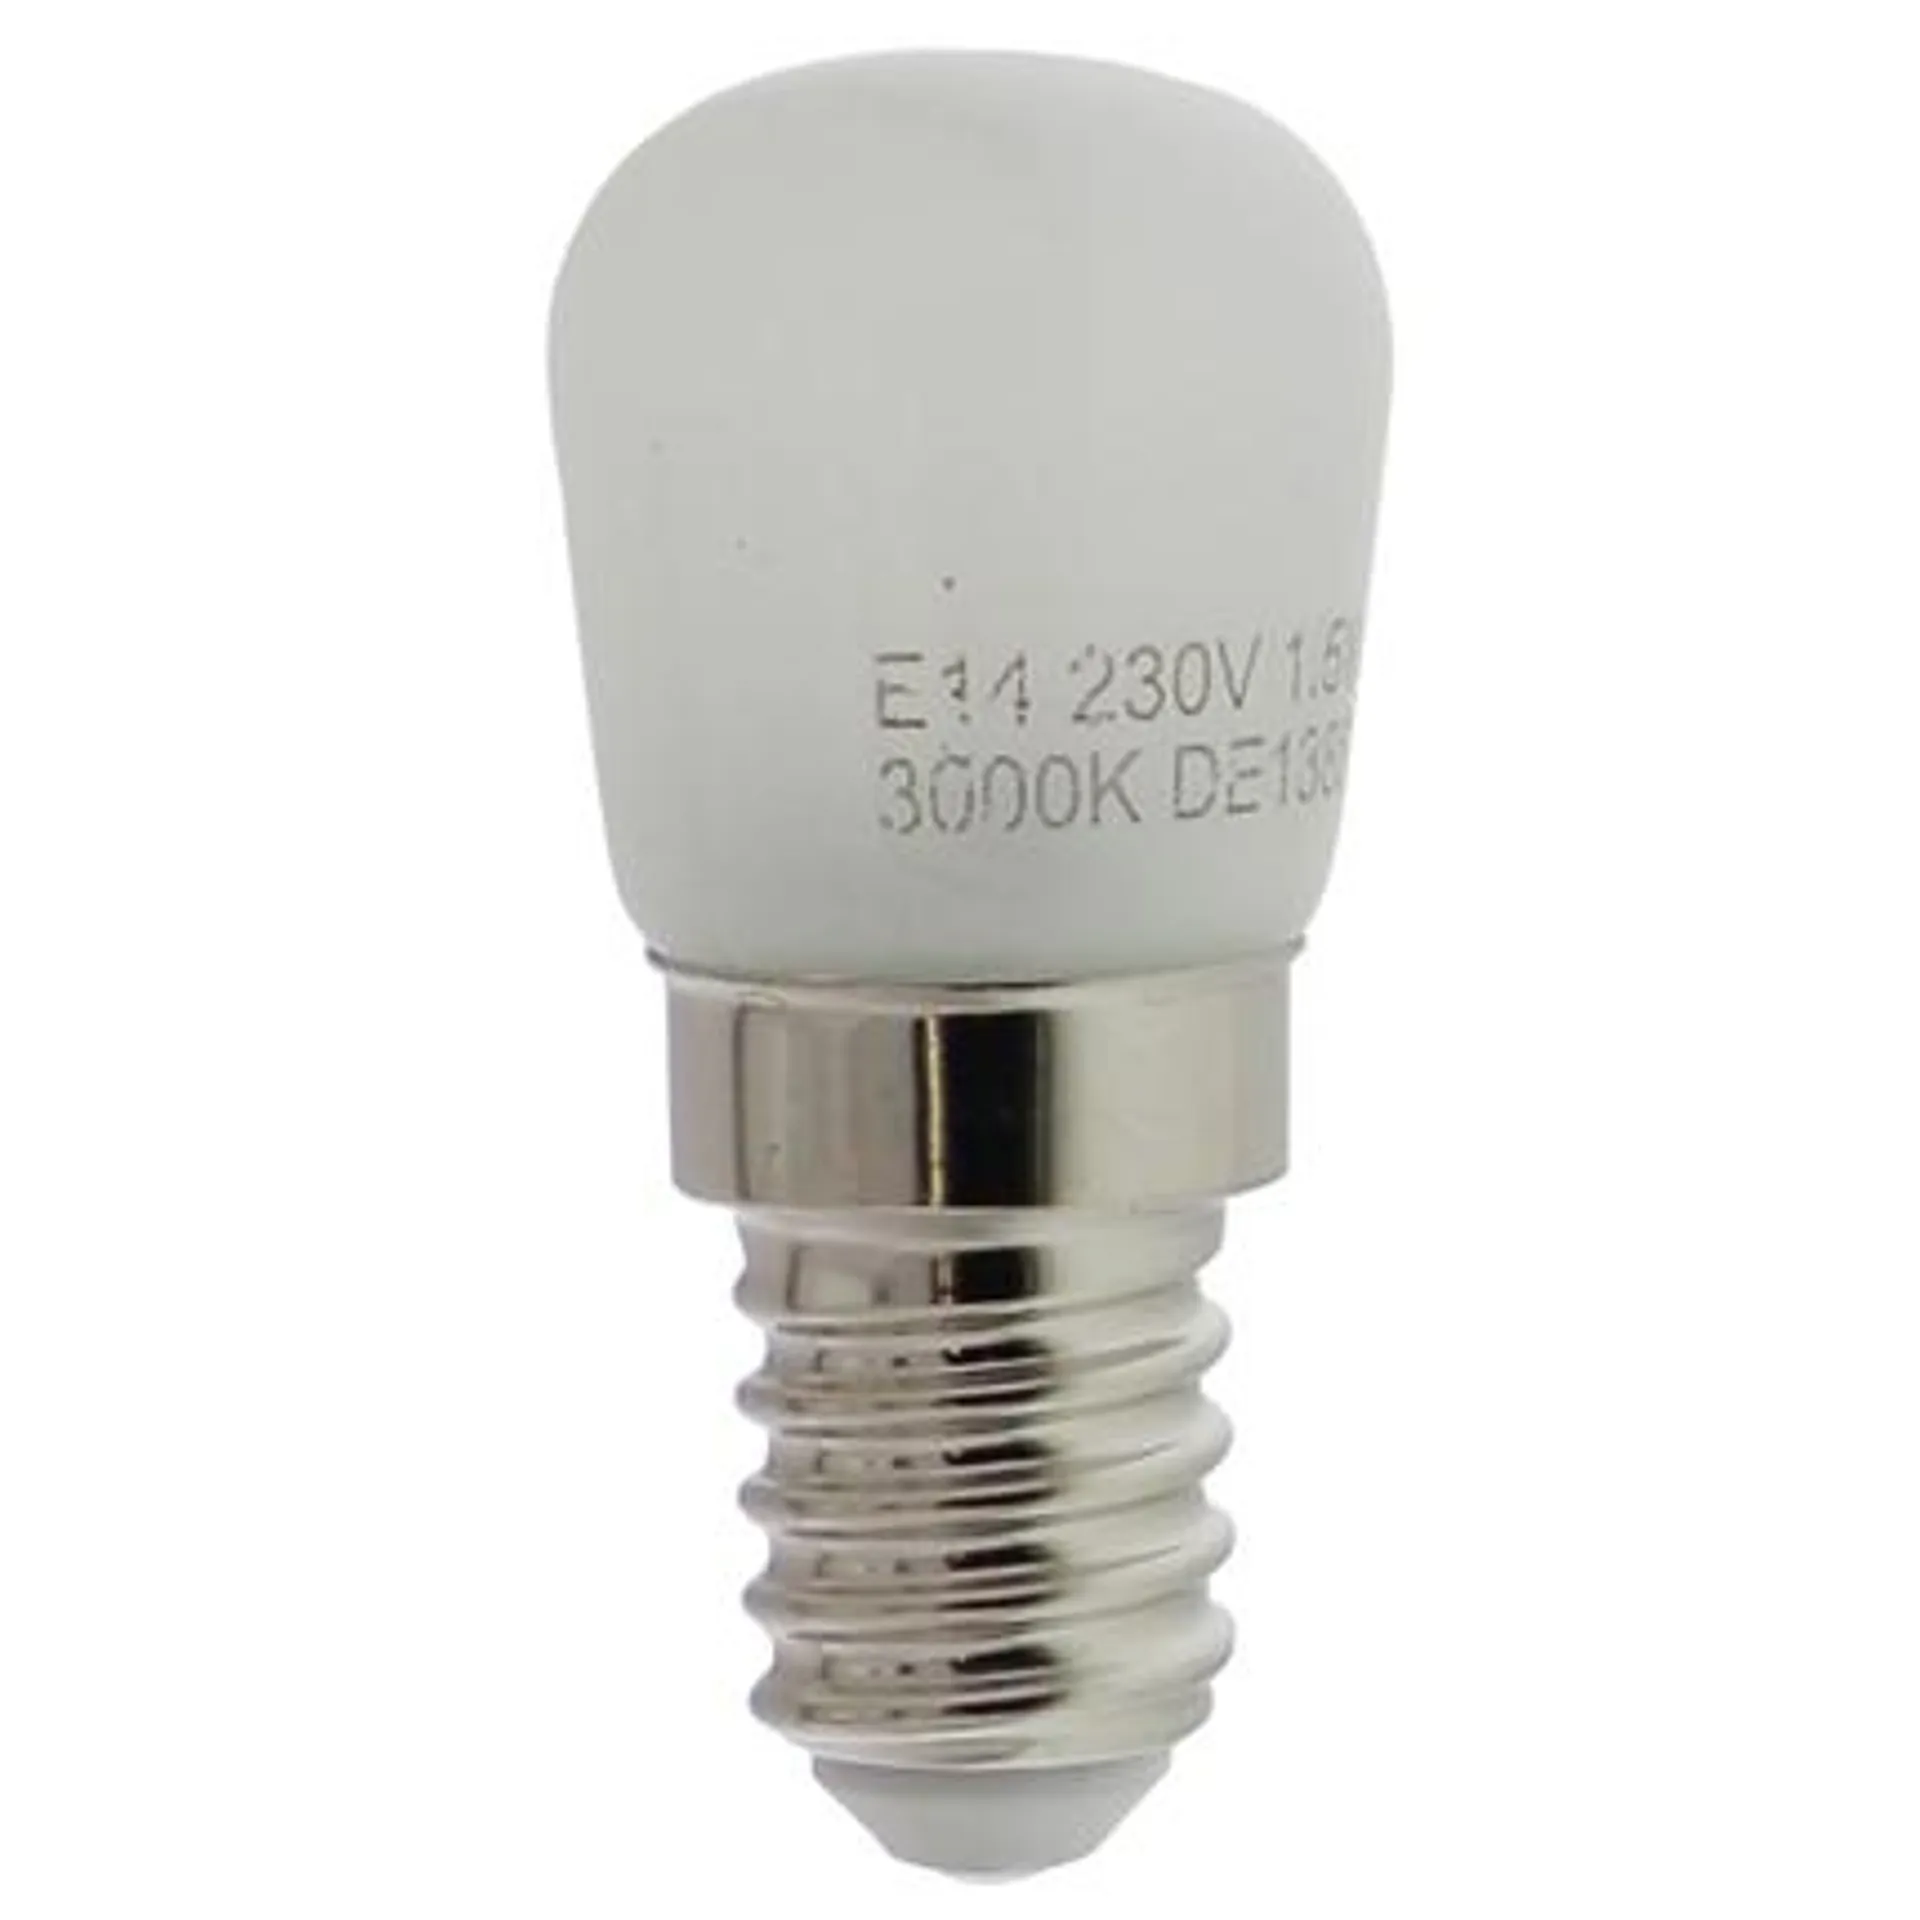 Scanpart Koelkastlamp E14 1,5W 100lm LED